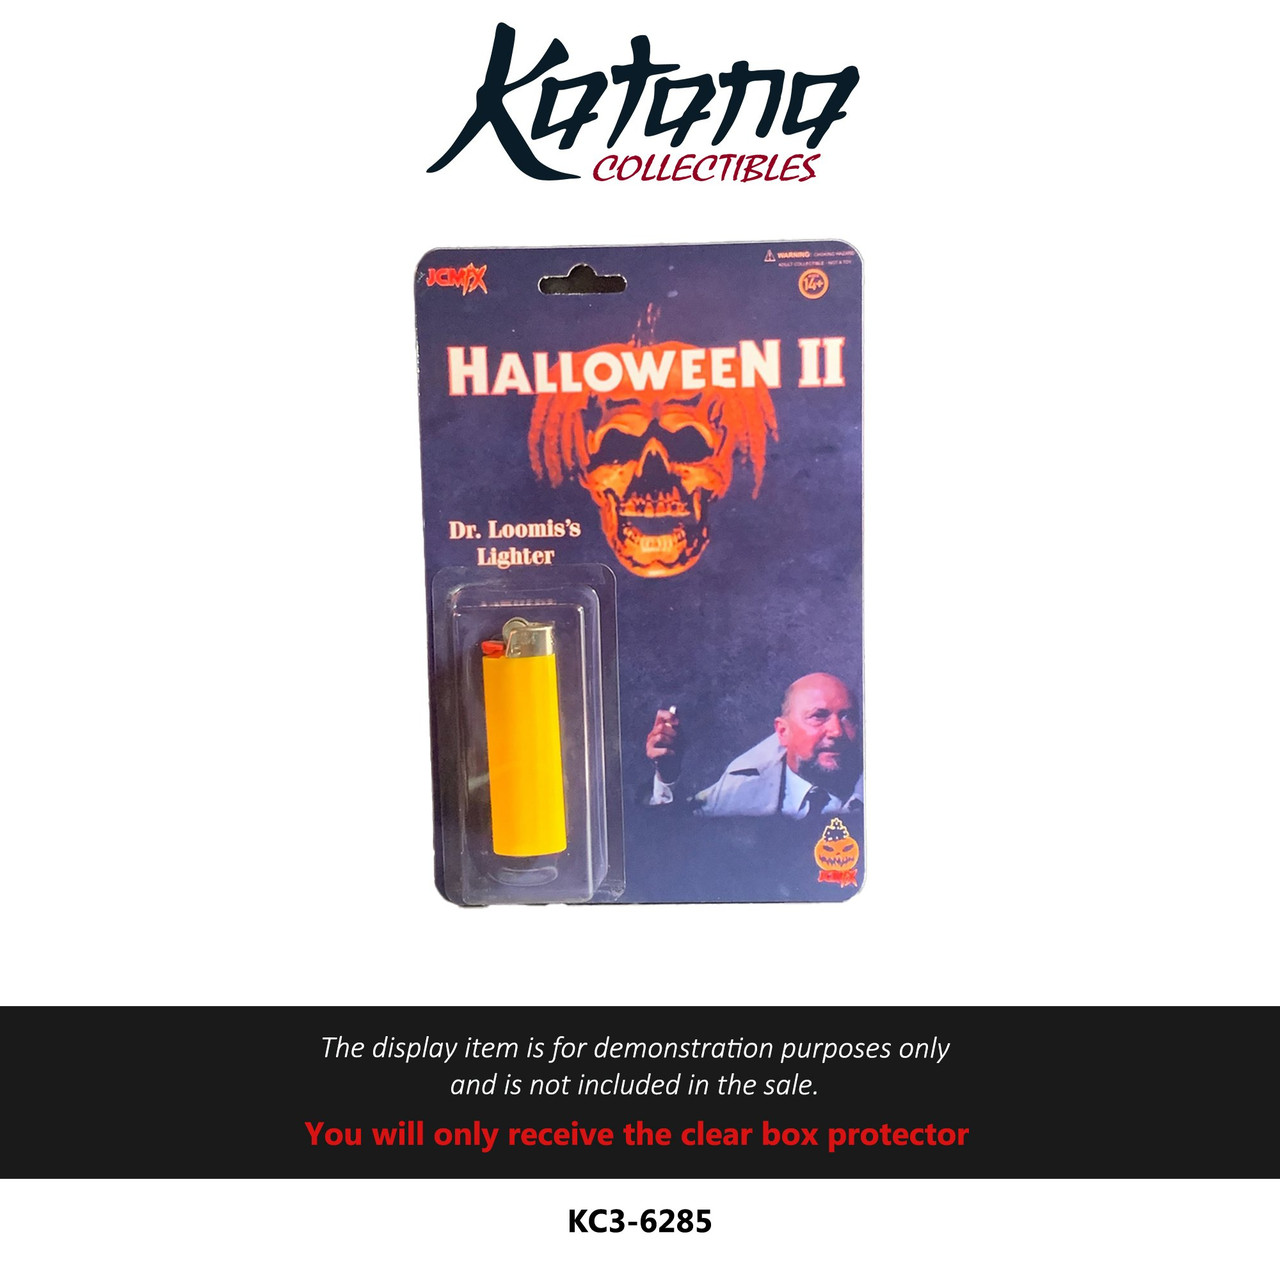 Katana Collectibles Protector For Halloween II - Dr. Loomis'S Lighter